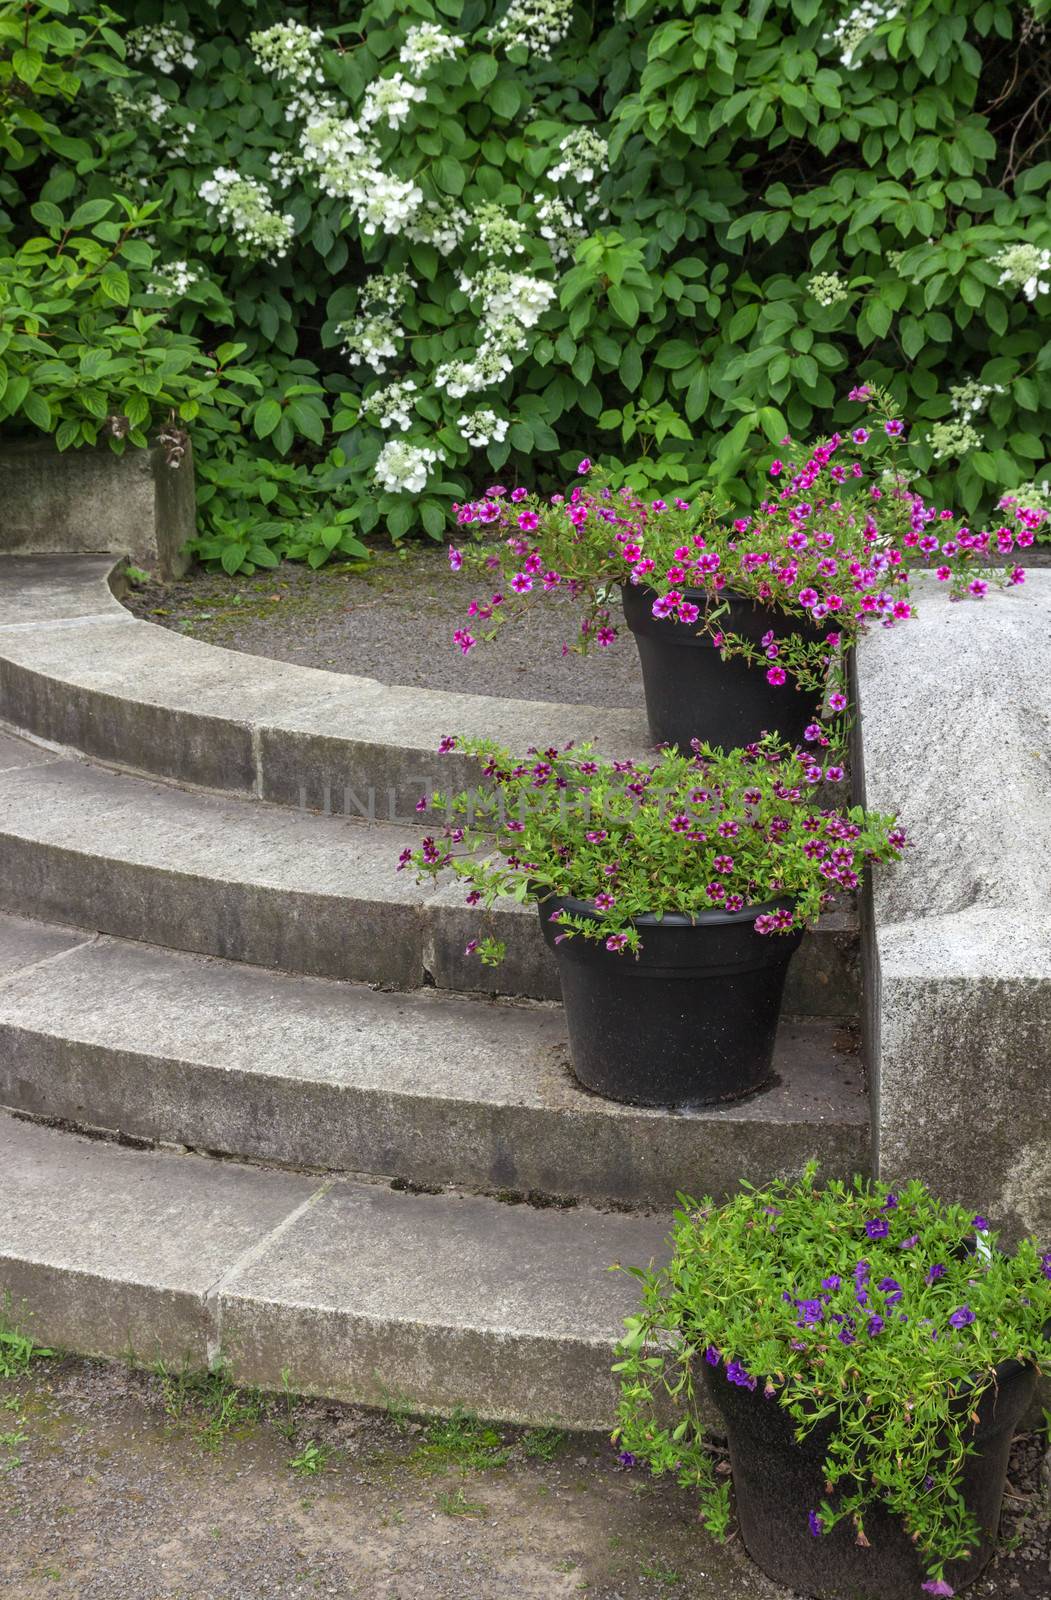 Flower pots decorating stone steps in a garden by anikasalsera